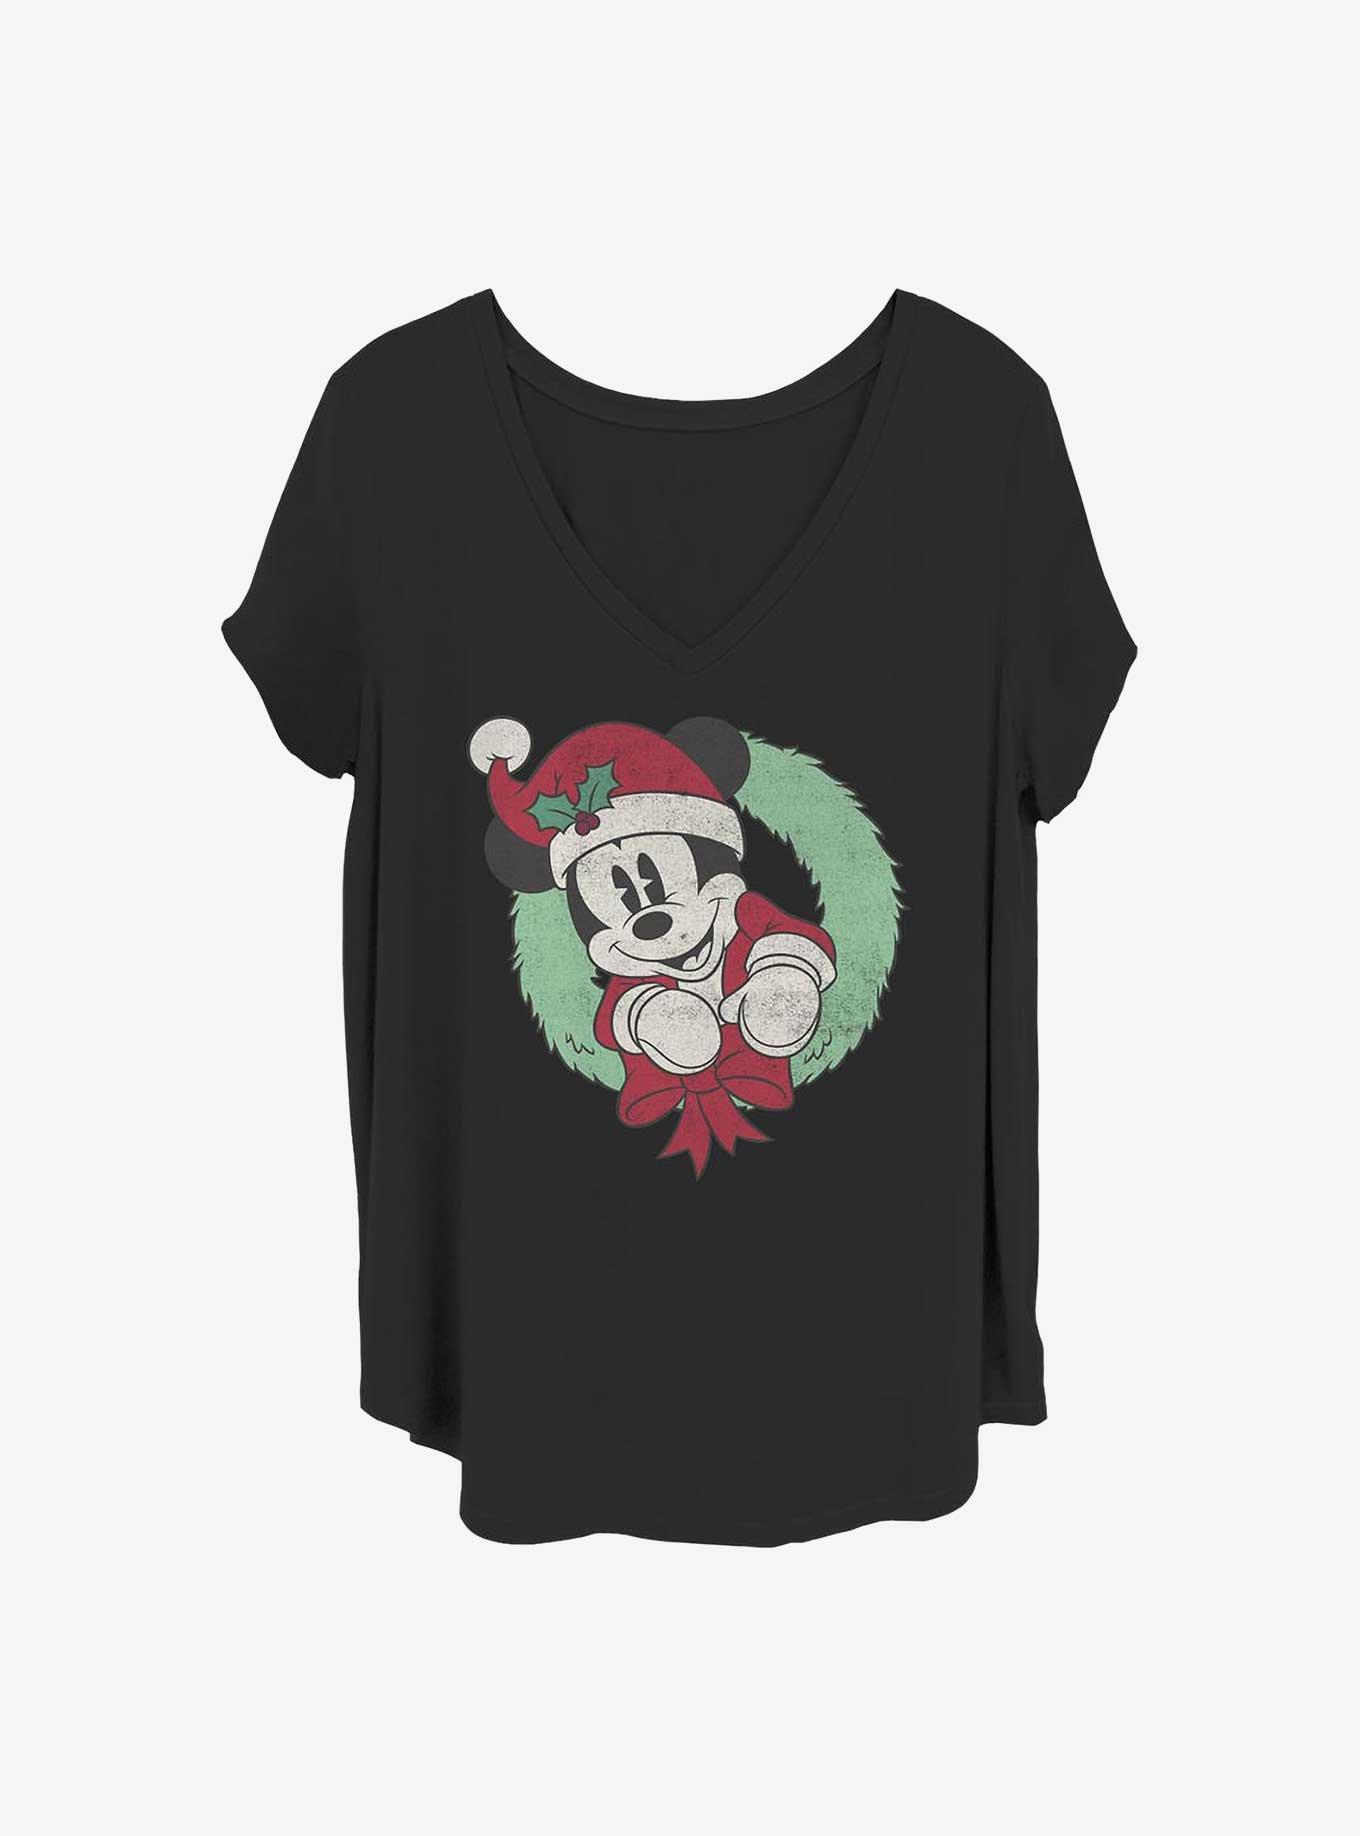 Disney Mickey Mouse Wreath Girls T-Shirt Plus